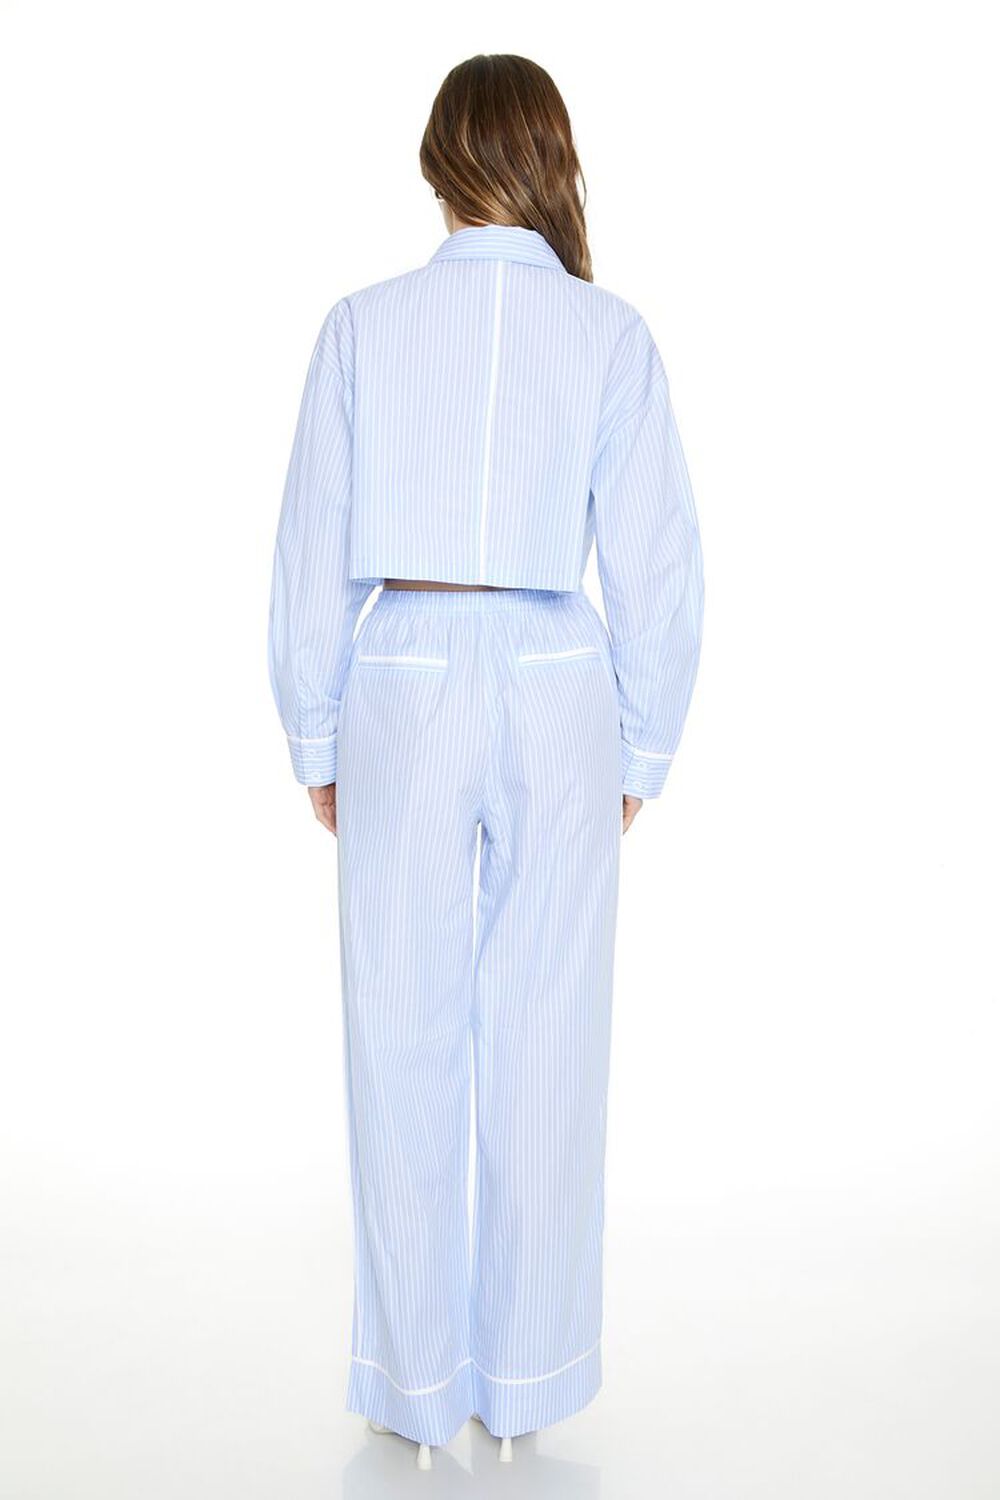 BLUE/WHITE Striped Shirt & Pants Set, image 3